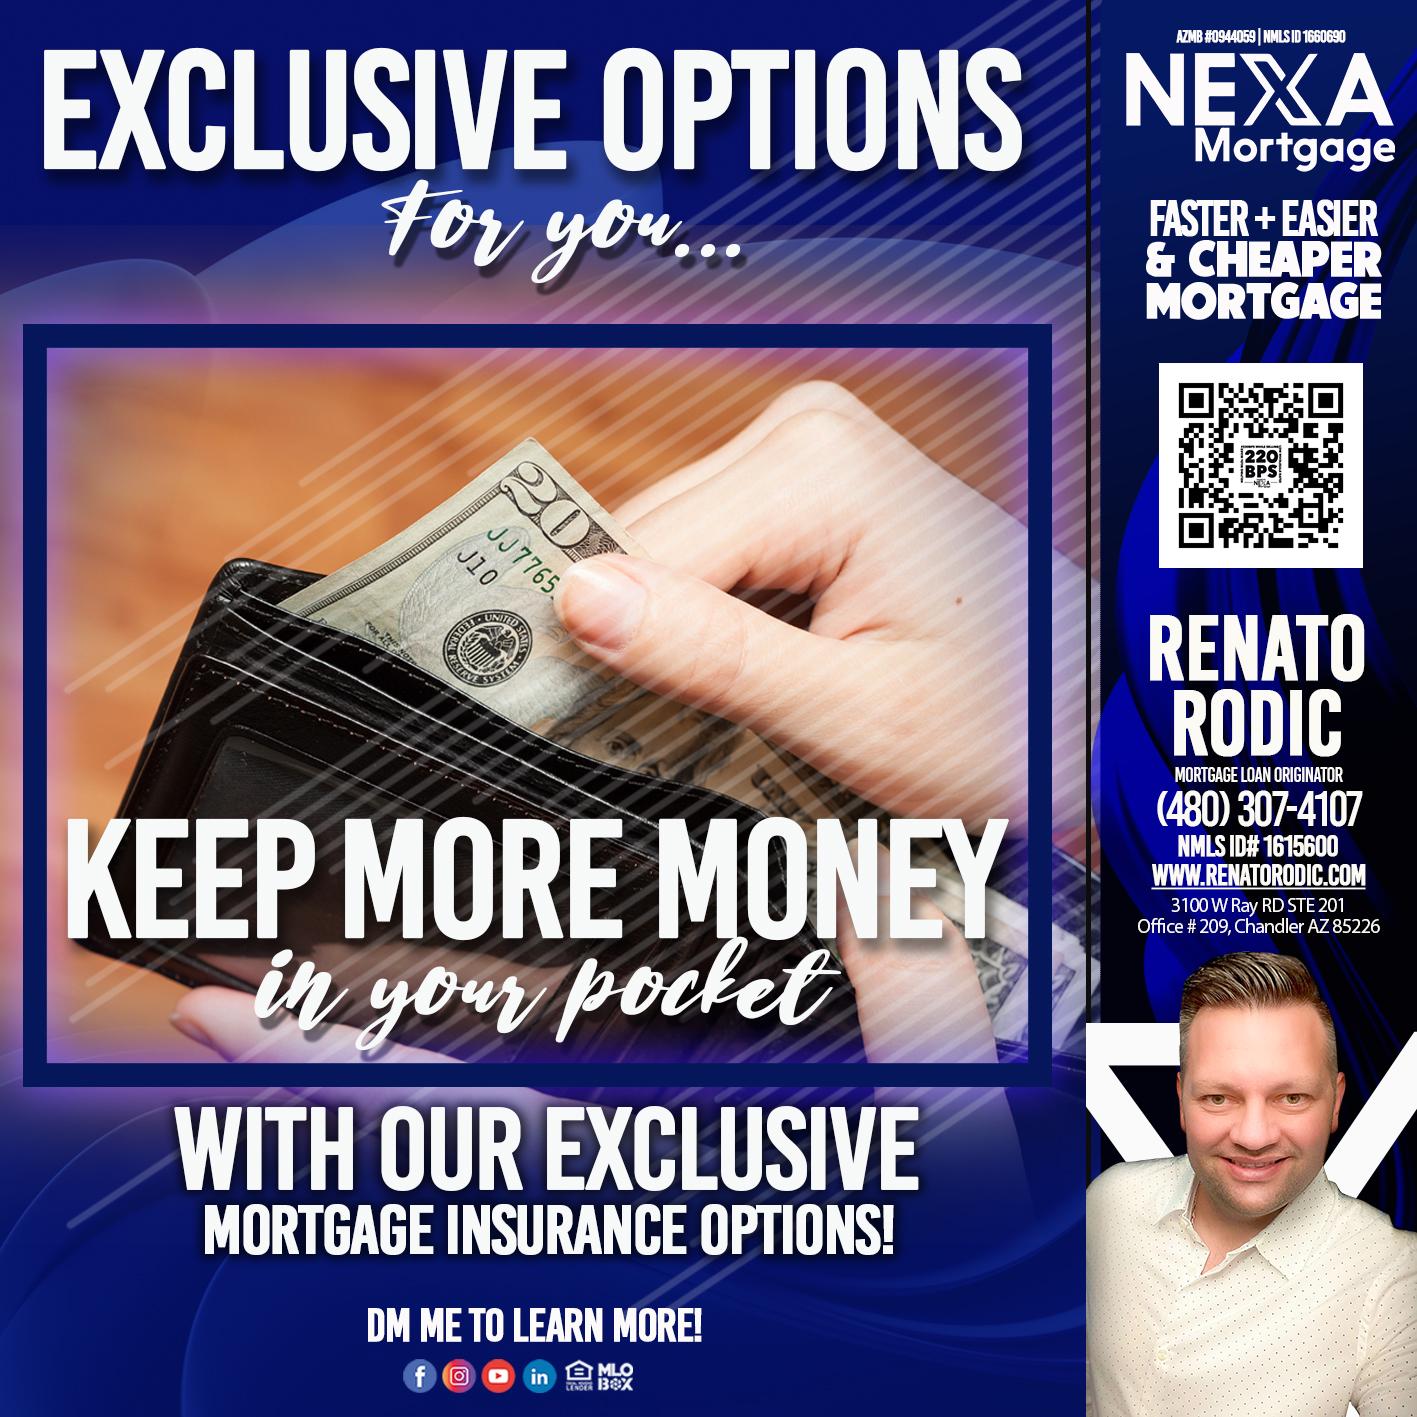 KEEP MORE MONEY - Renato Rodic -Mortgage Loan Originator